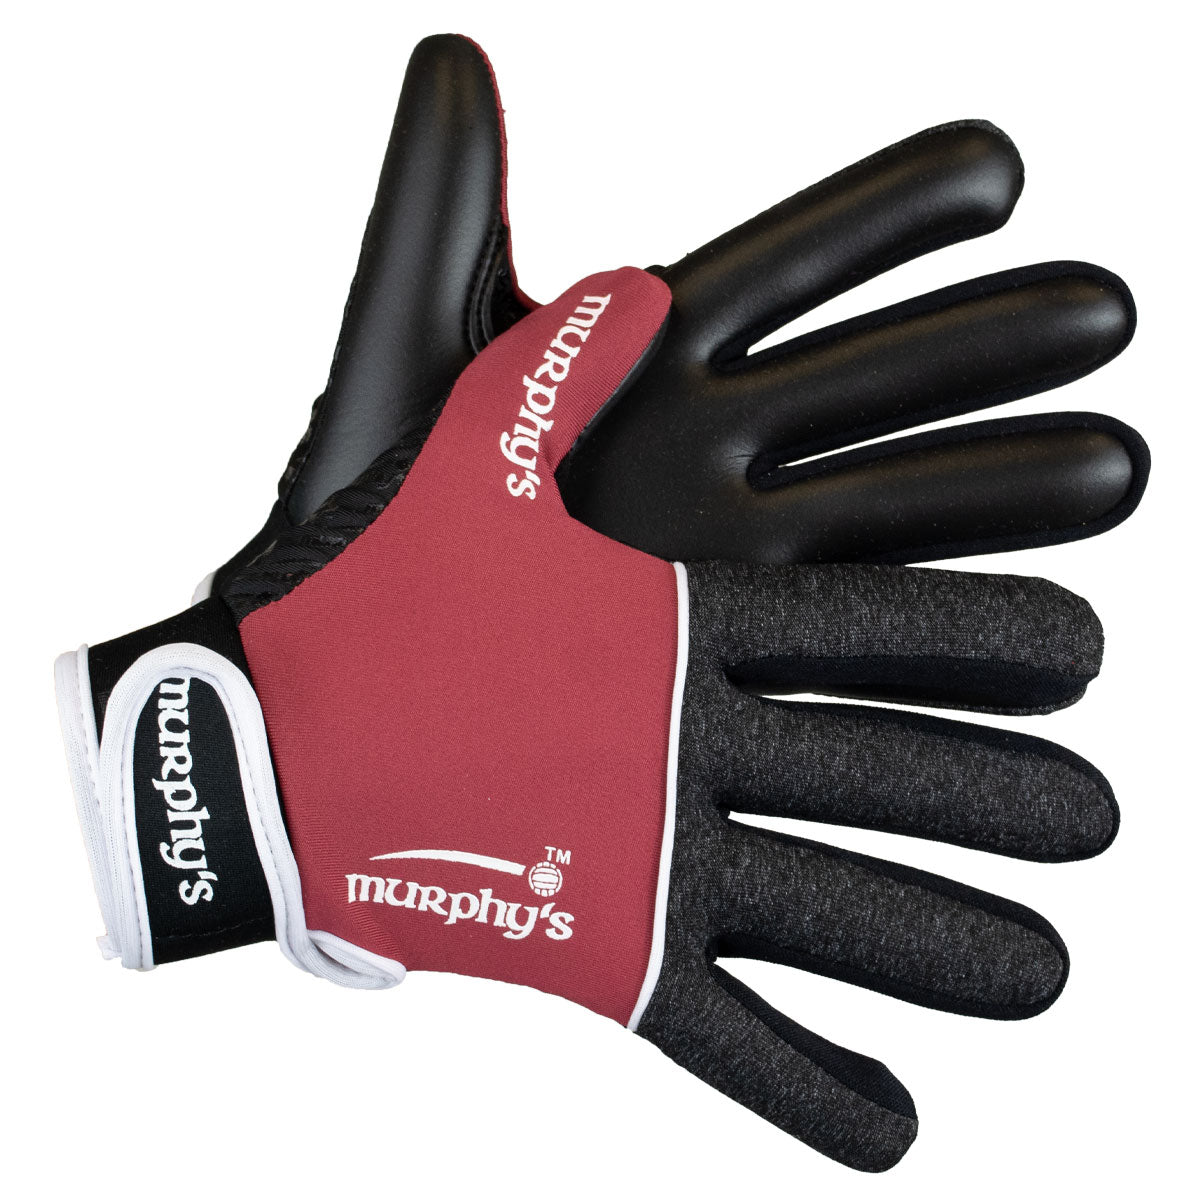 Murphy's V2 Gaelic Gloves - Adult - Grey/Maroon/White